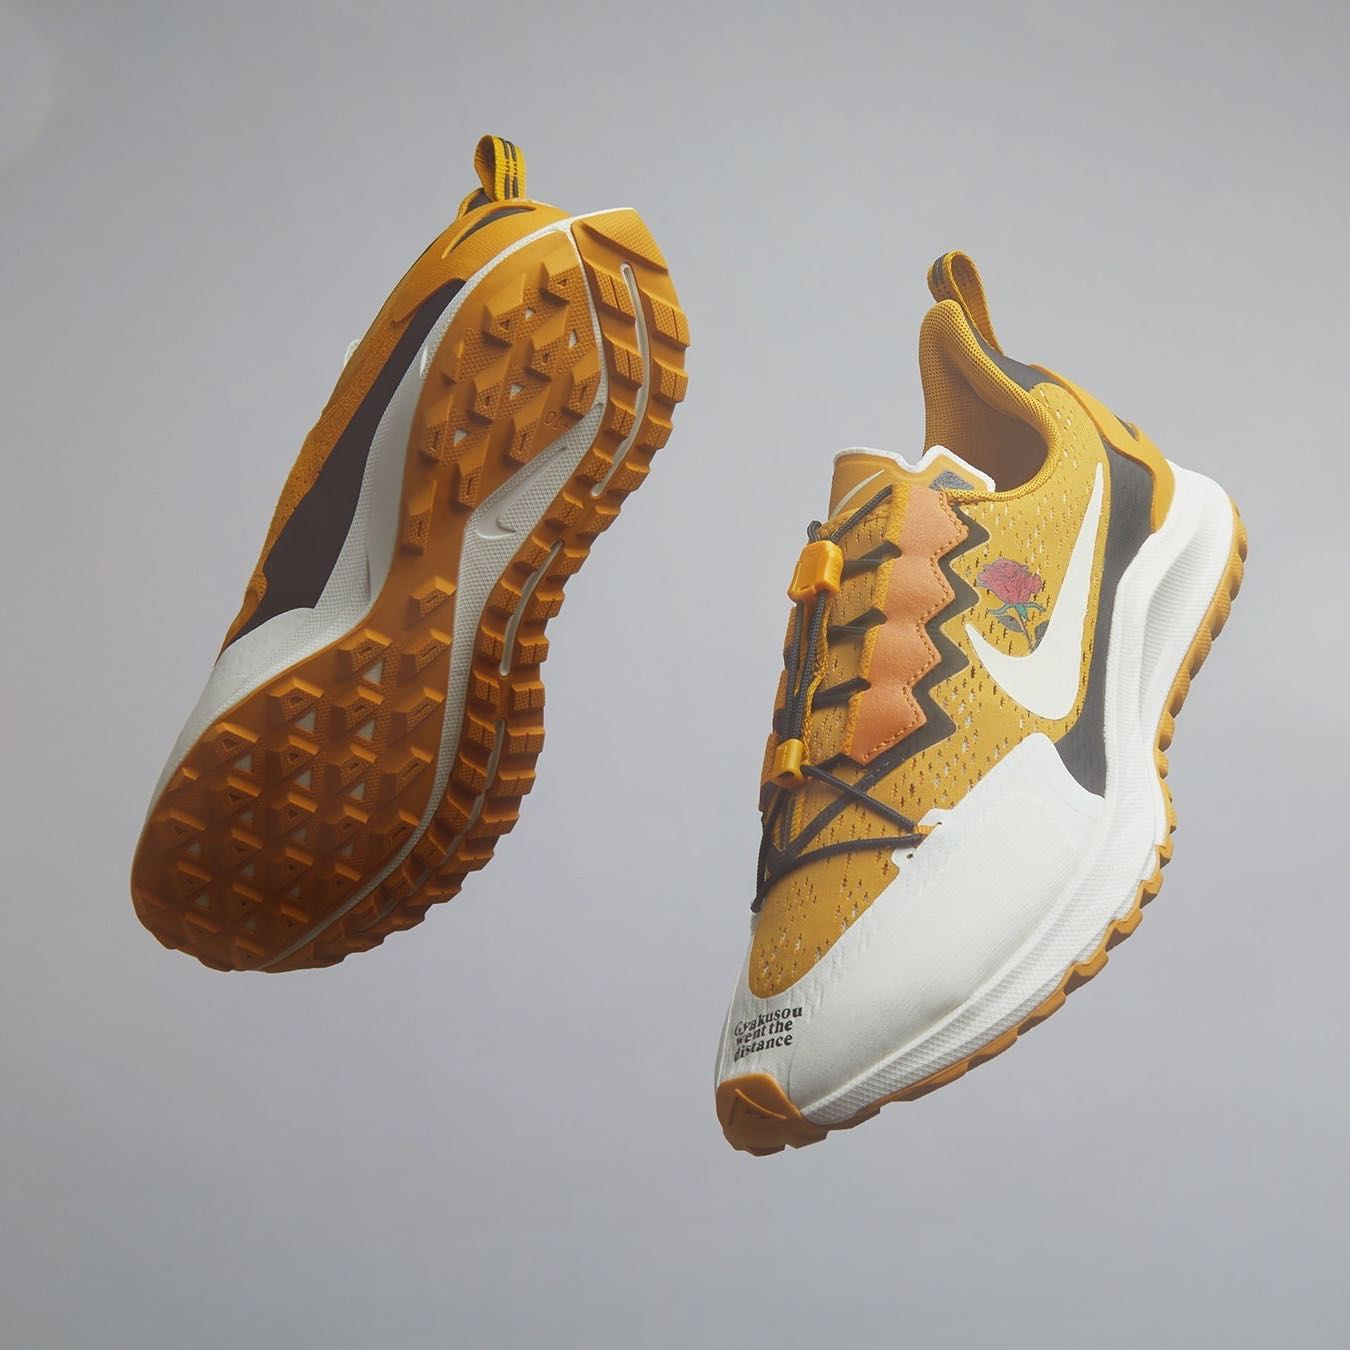 Nike x Gyakusou Trail SP
« Mineral Yellow »